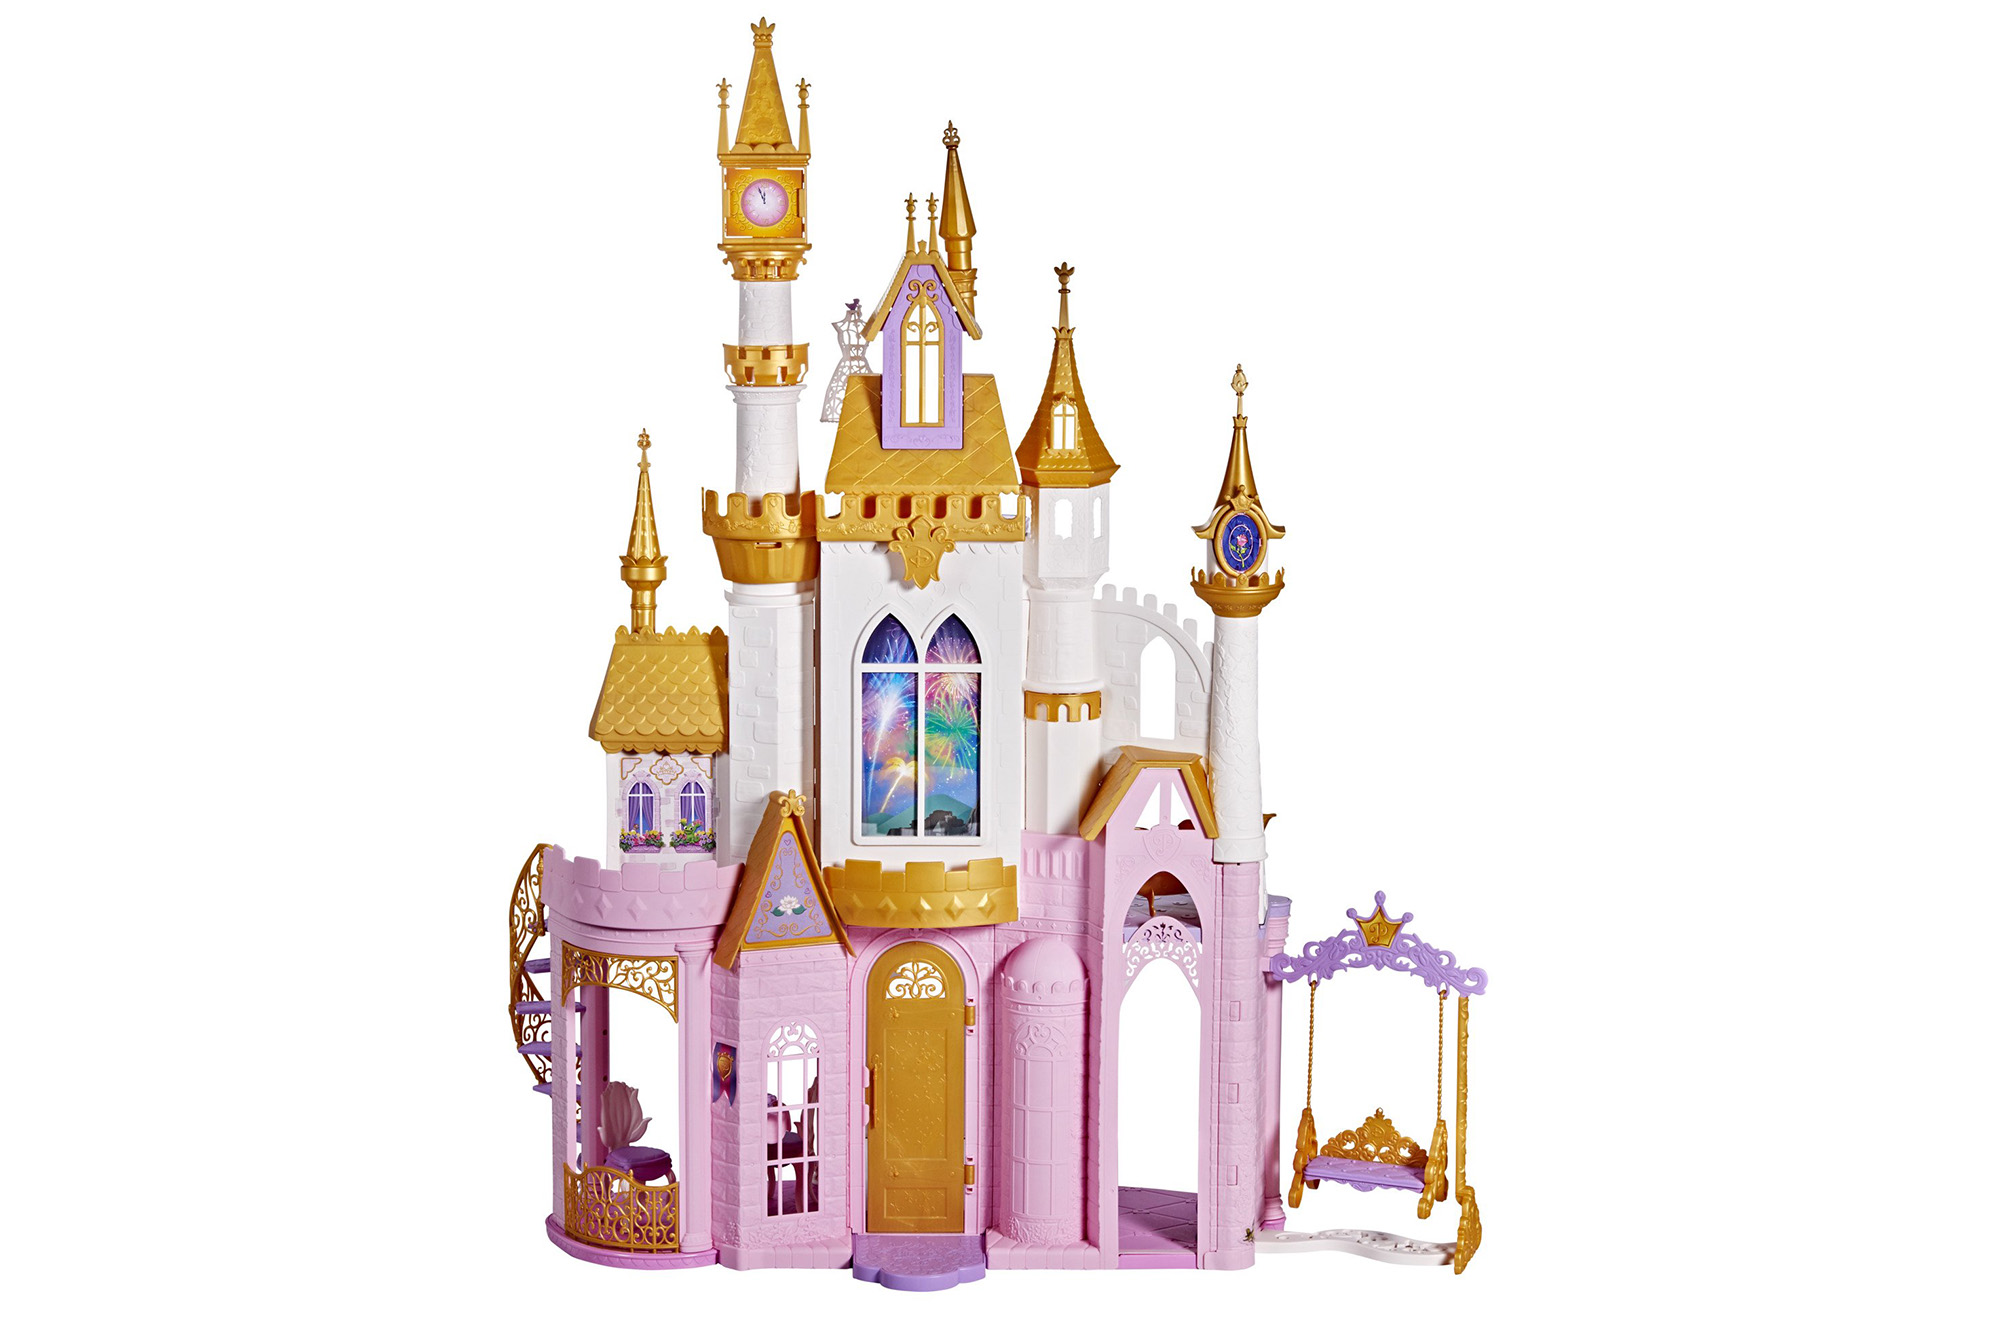 A magical Disney Princess toy castle set 